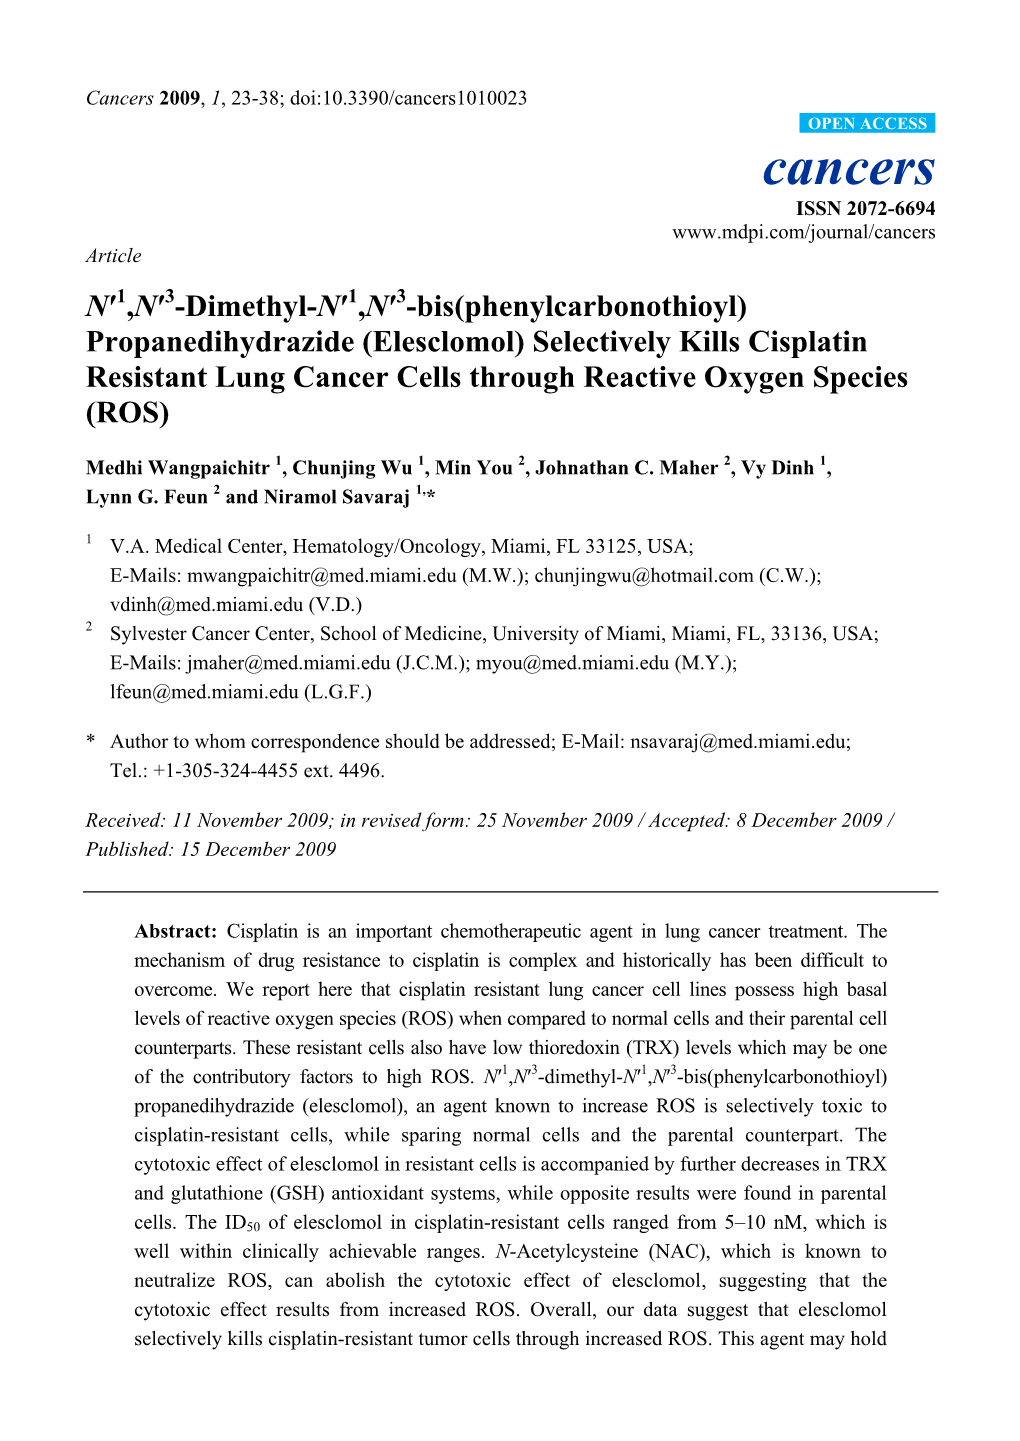 Elesclomol) Selectively Kills Cisplatin Resistant Lung Cancer Cells Through Reactive Oxygen Species (ROS